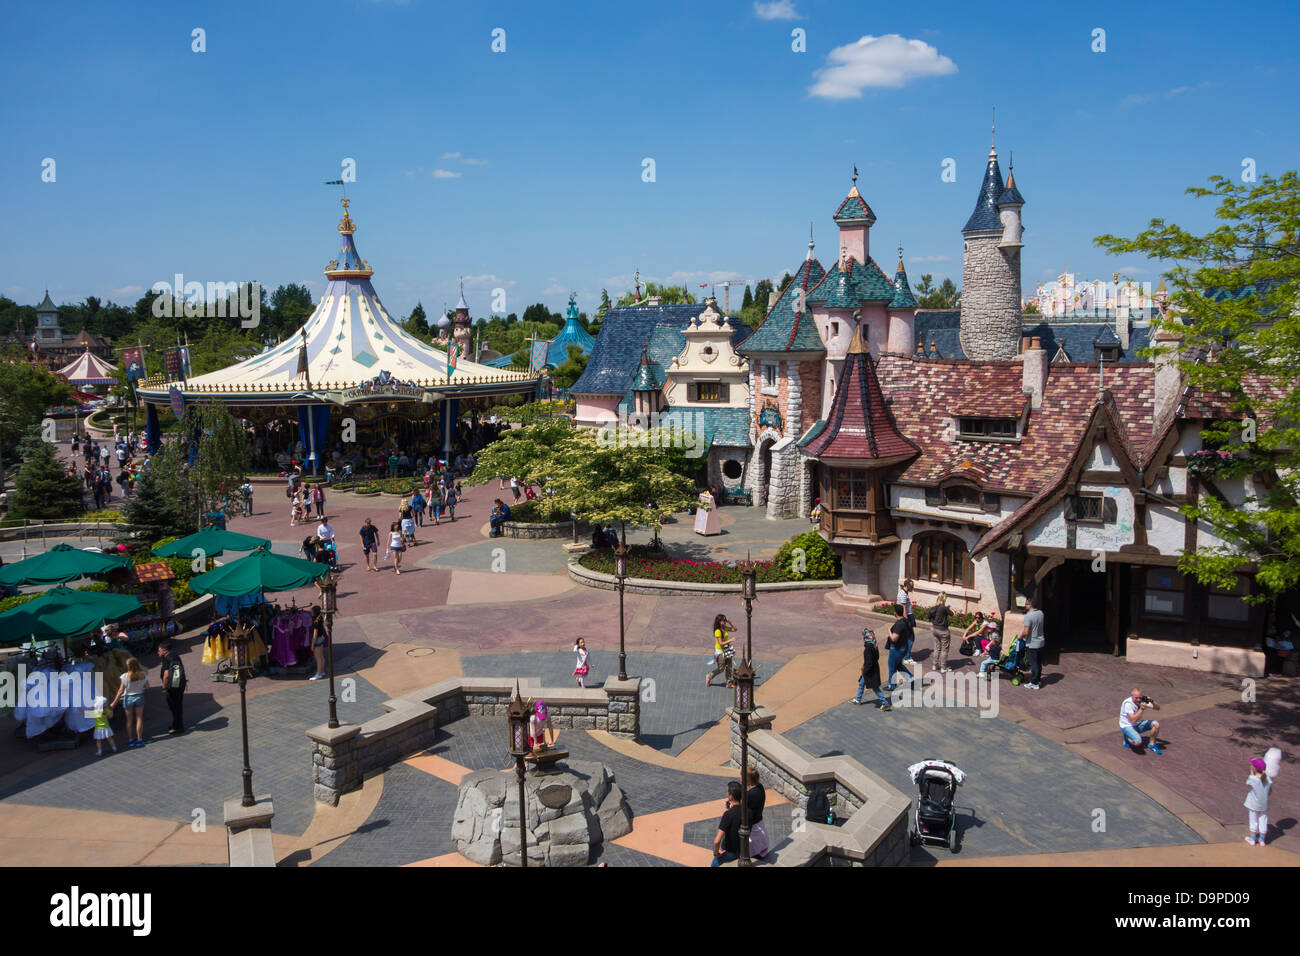 Disneyland Park (Paris) - Wikipedia